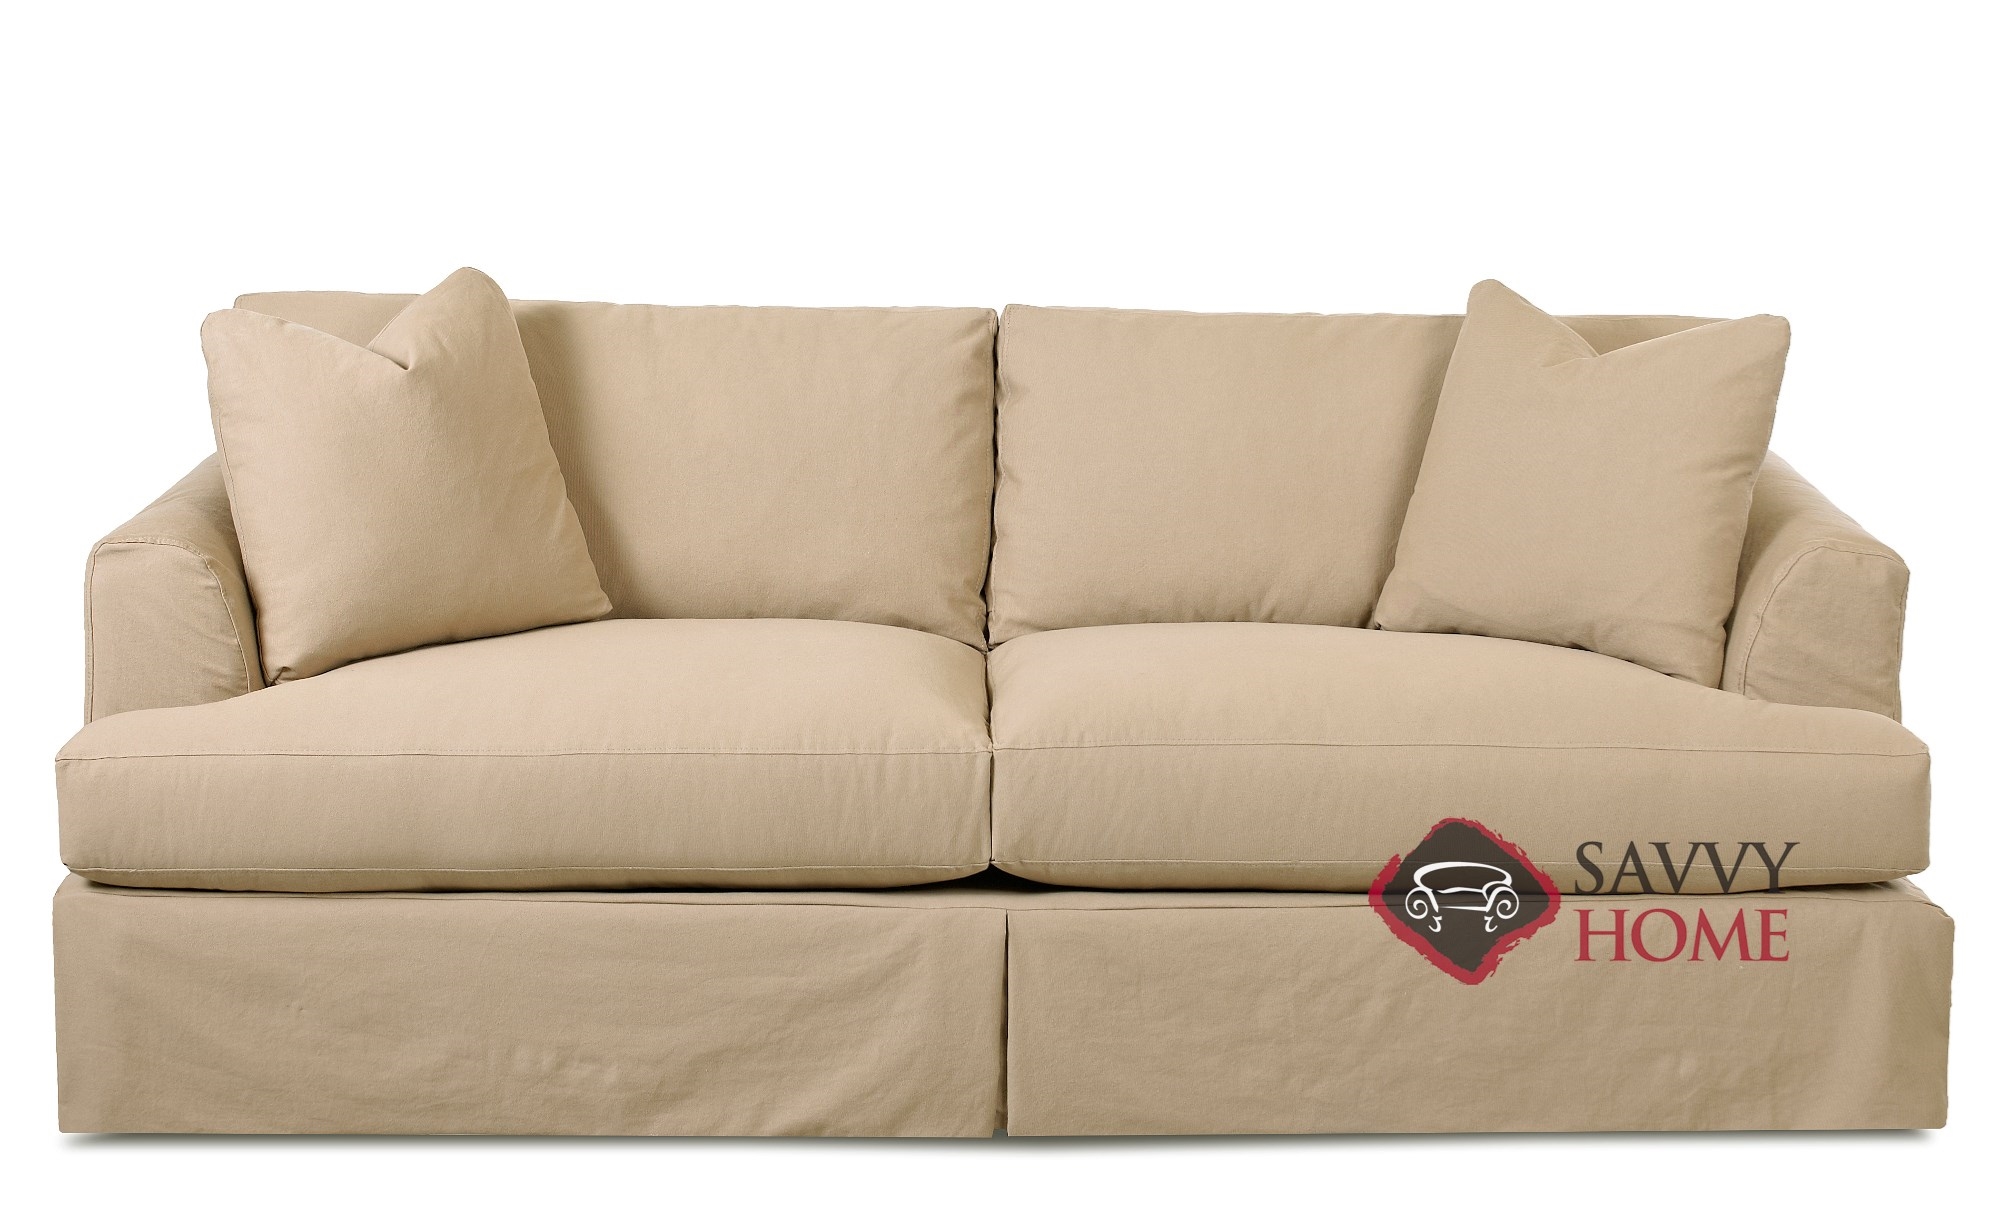 Berkeley Fabric Sleeper Sofas Queen By, Can You Slipcover A Sleeper Sofa